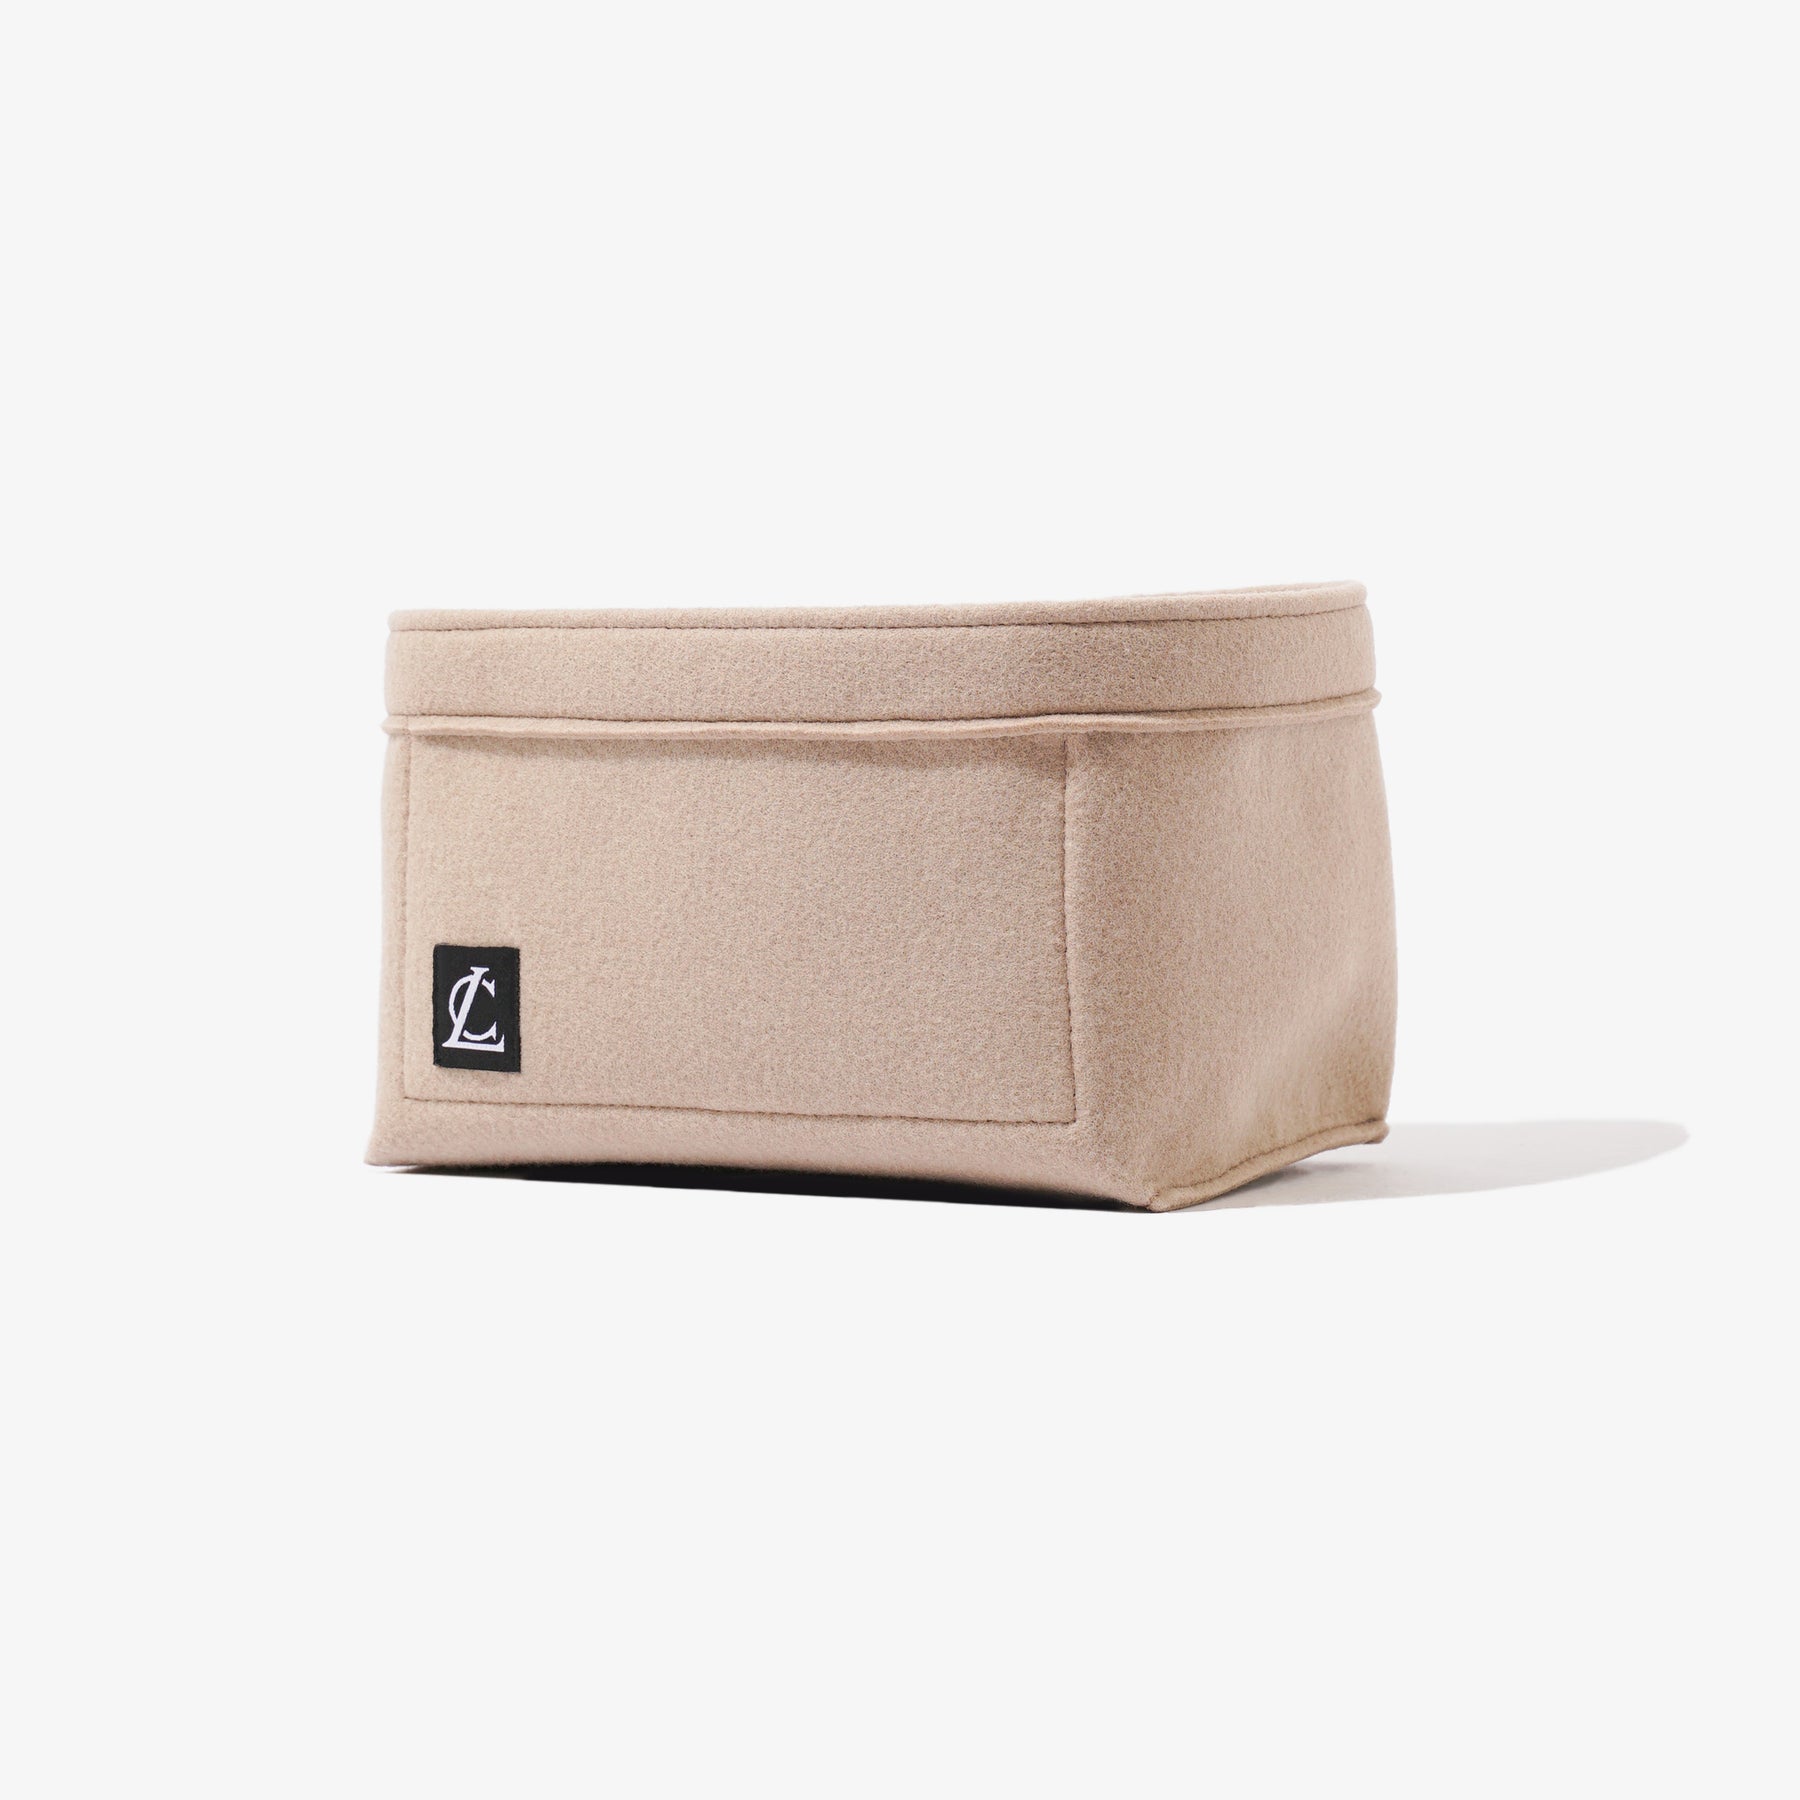 Louis Vuitton Toiletry 26 Bag Liner – Luxe Collective